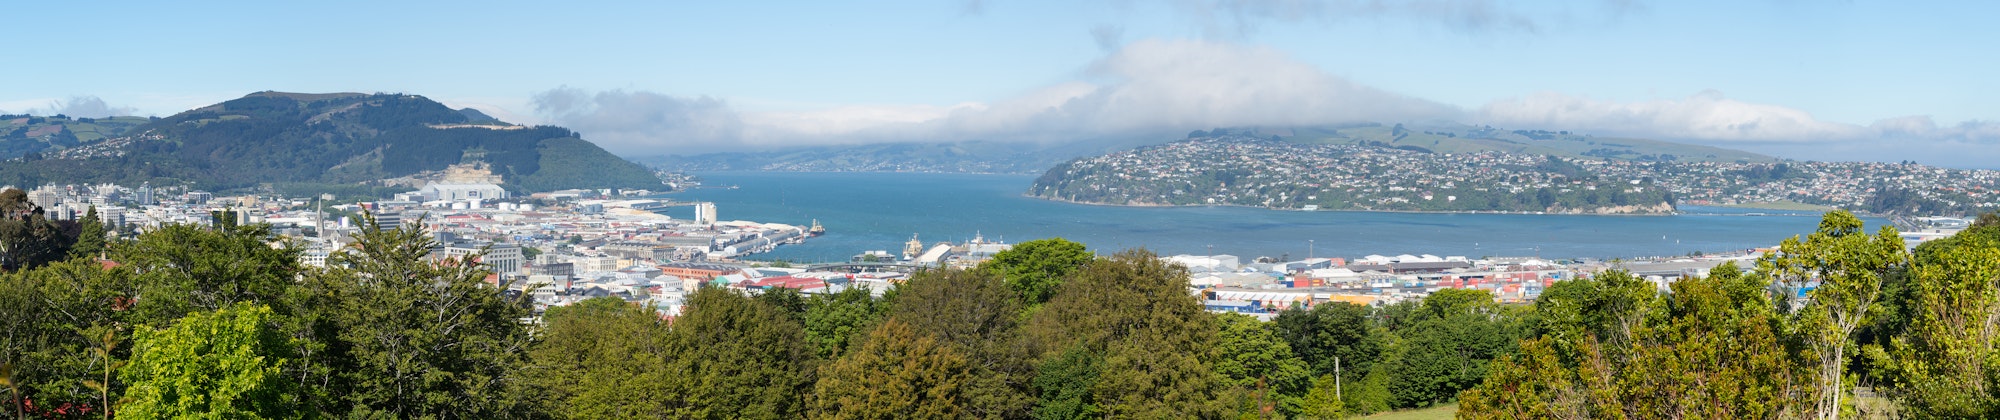 Dunedin | The Property Group NZ